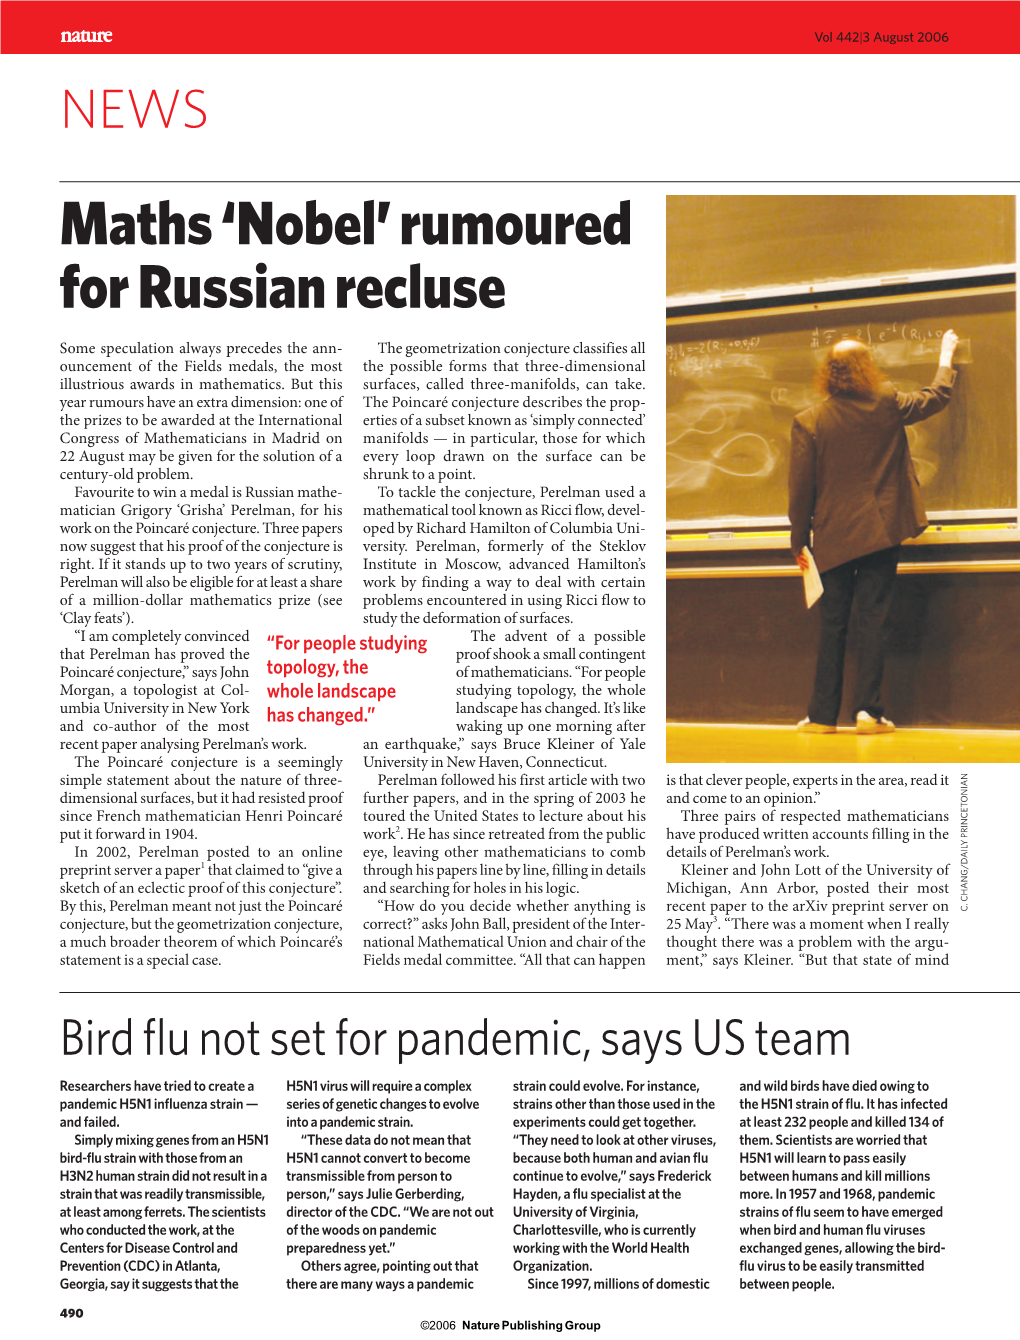 Maths 'Nobel' Rumoured for Russian Recluse